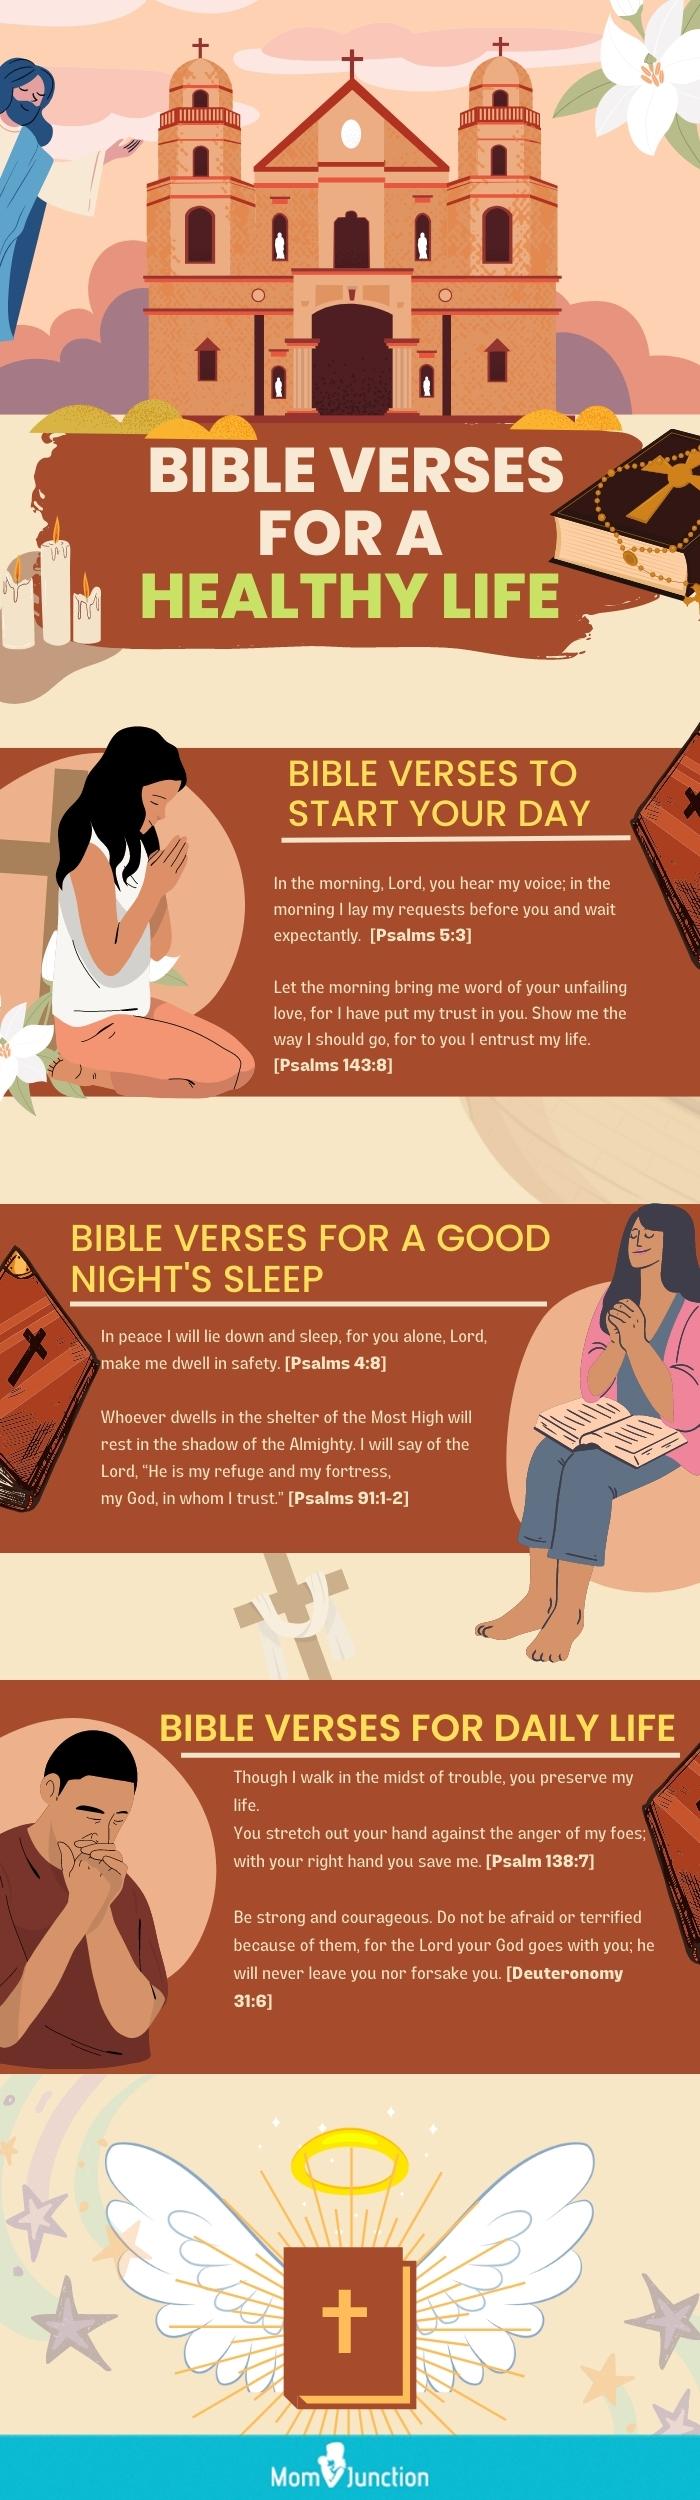 bible verses regarding prayers for a healthy life [infographic]